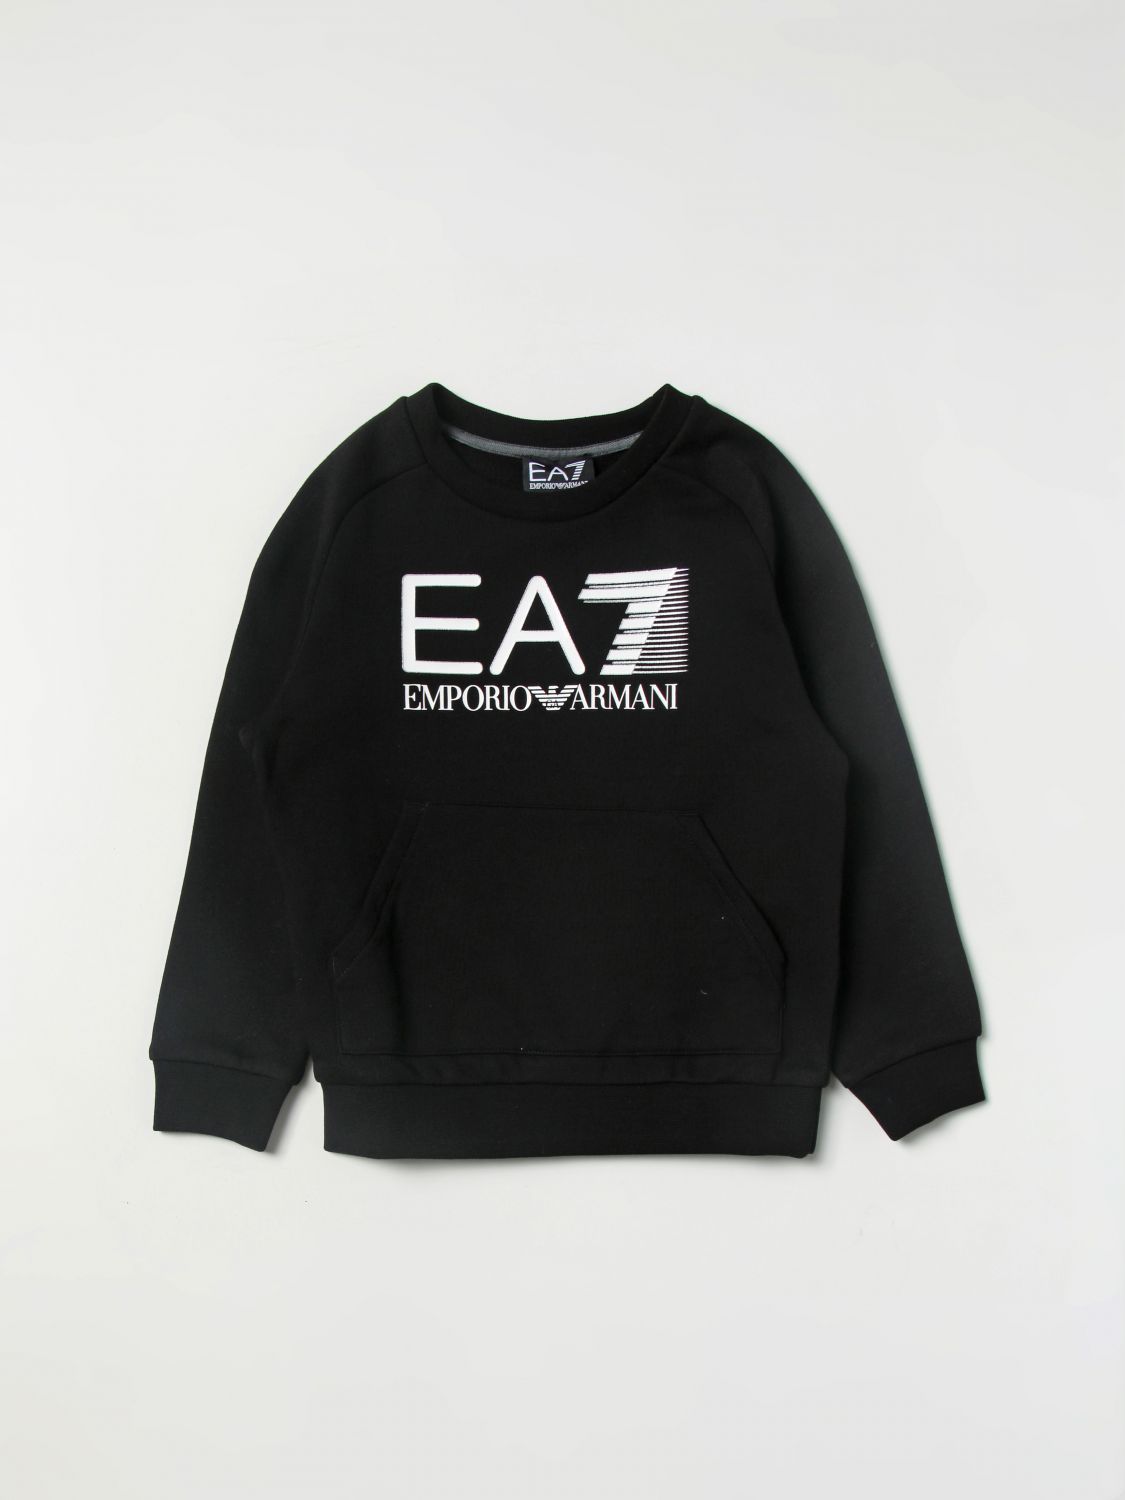 EA7: for - 1 Ea7 sweater 6LBM57BJEXZ online on GIGLIO.COM